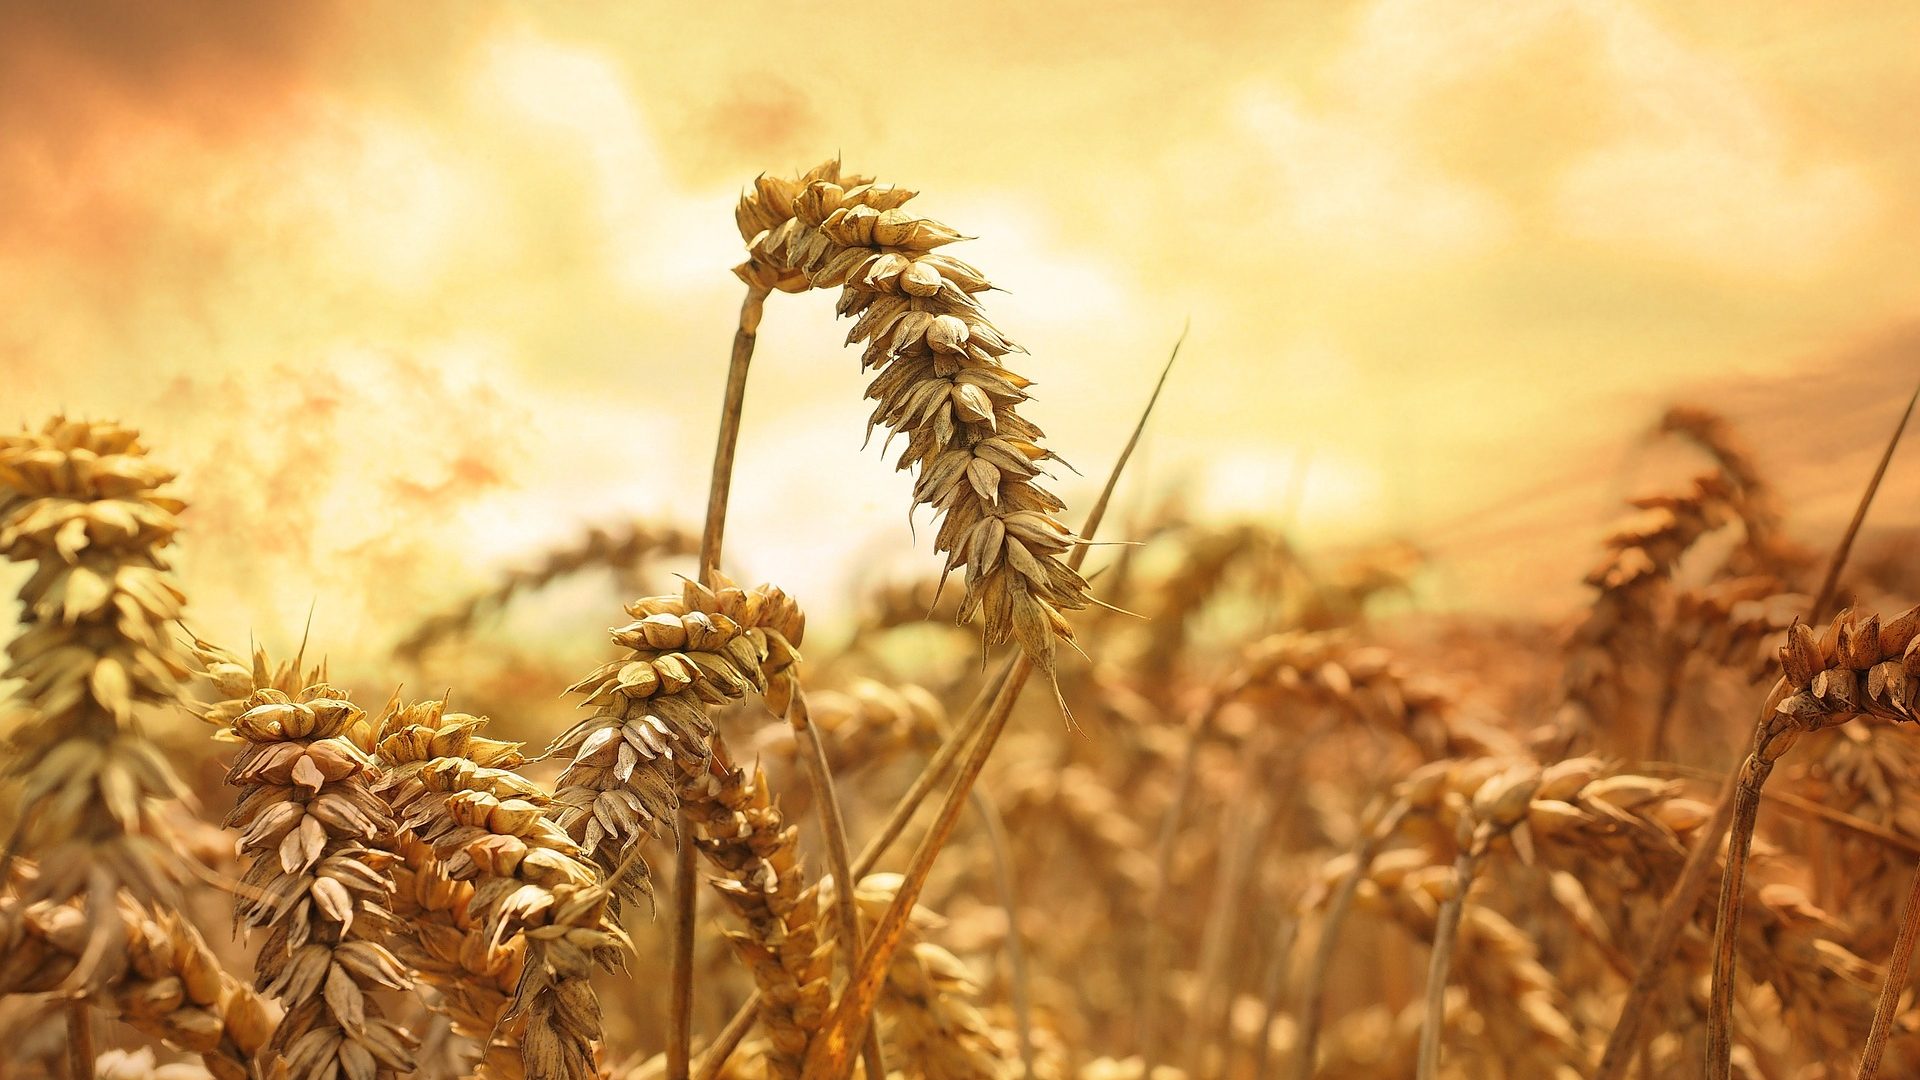 Grain of Wheat